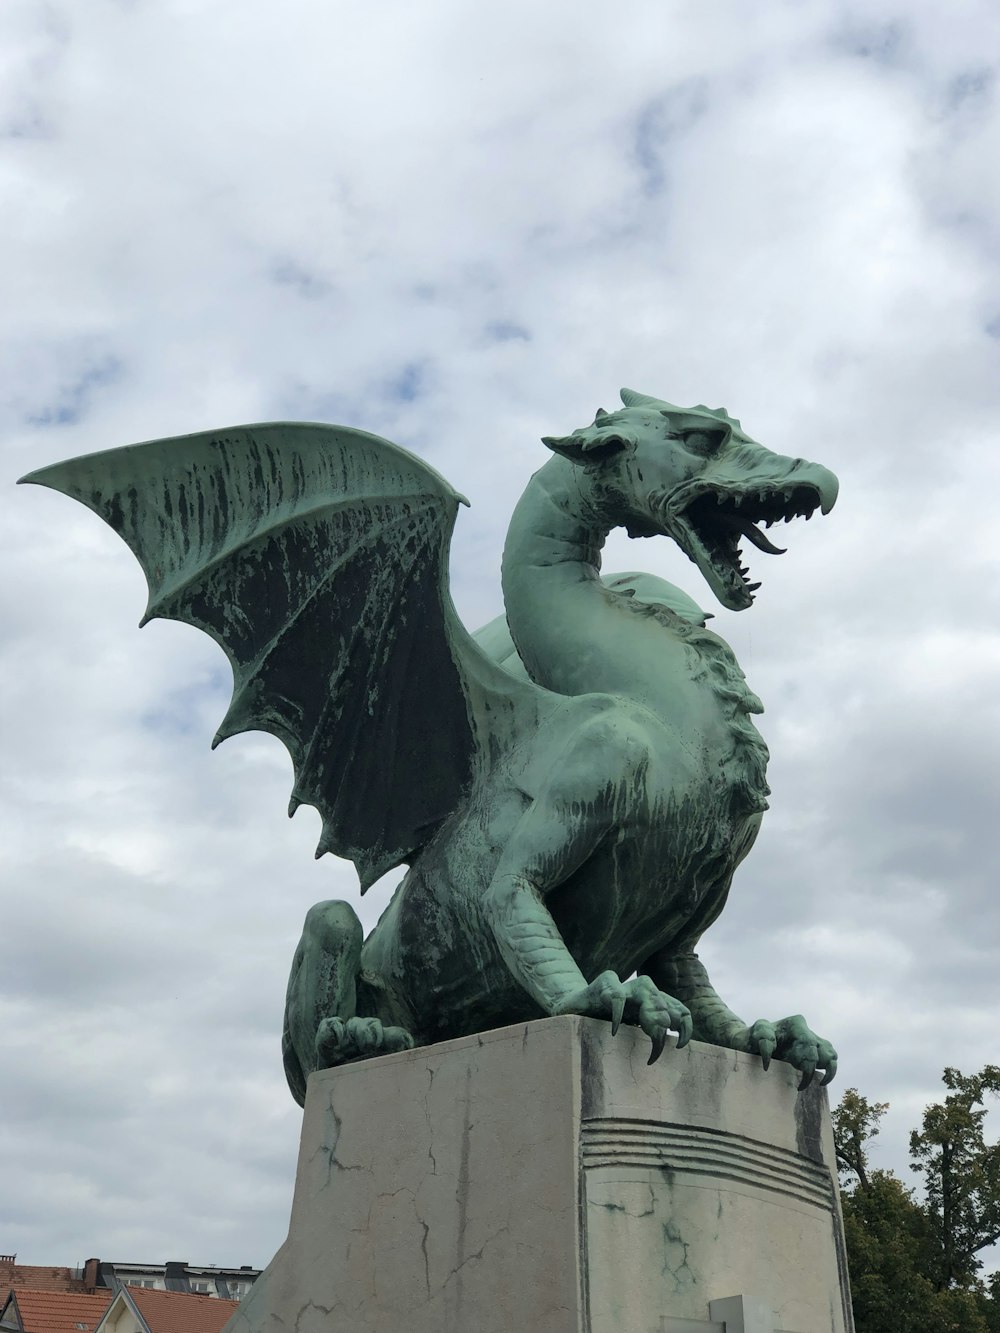 a statue of a green dragon on a pedestal